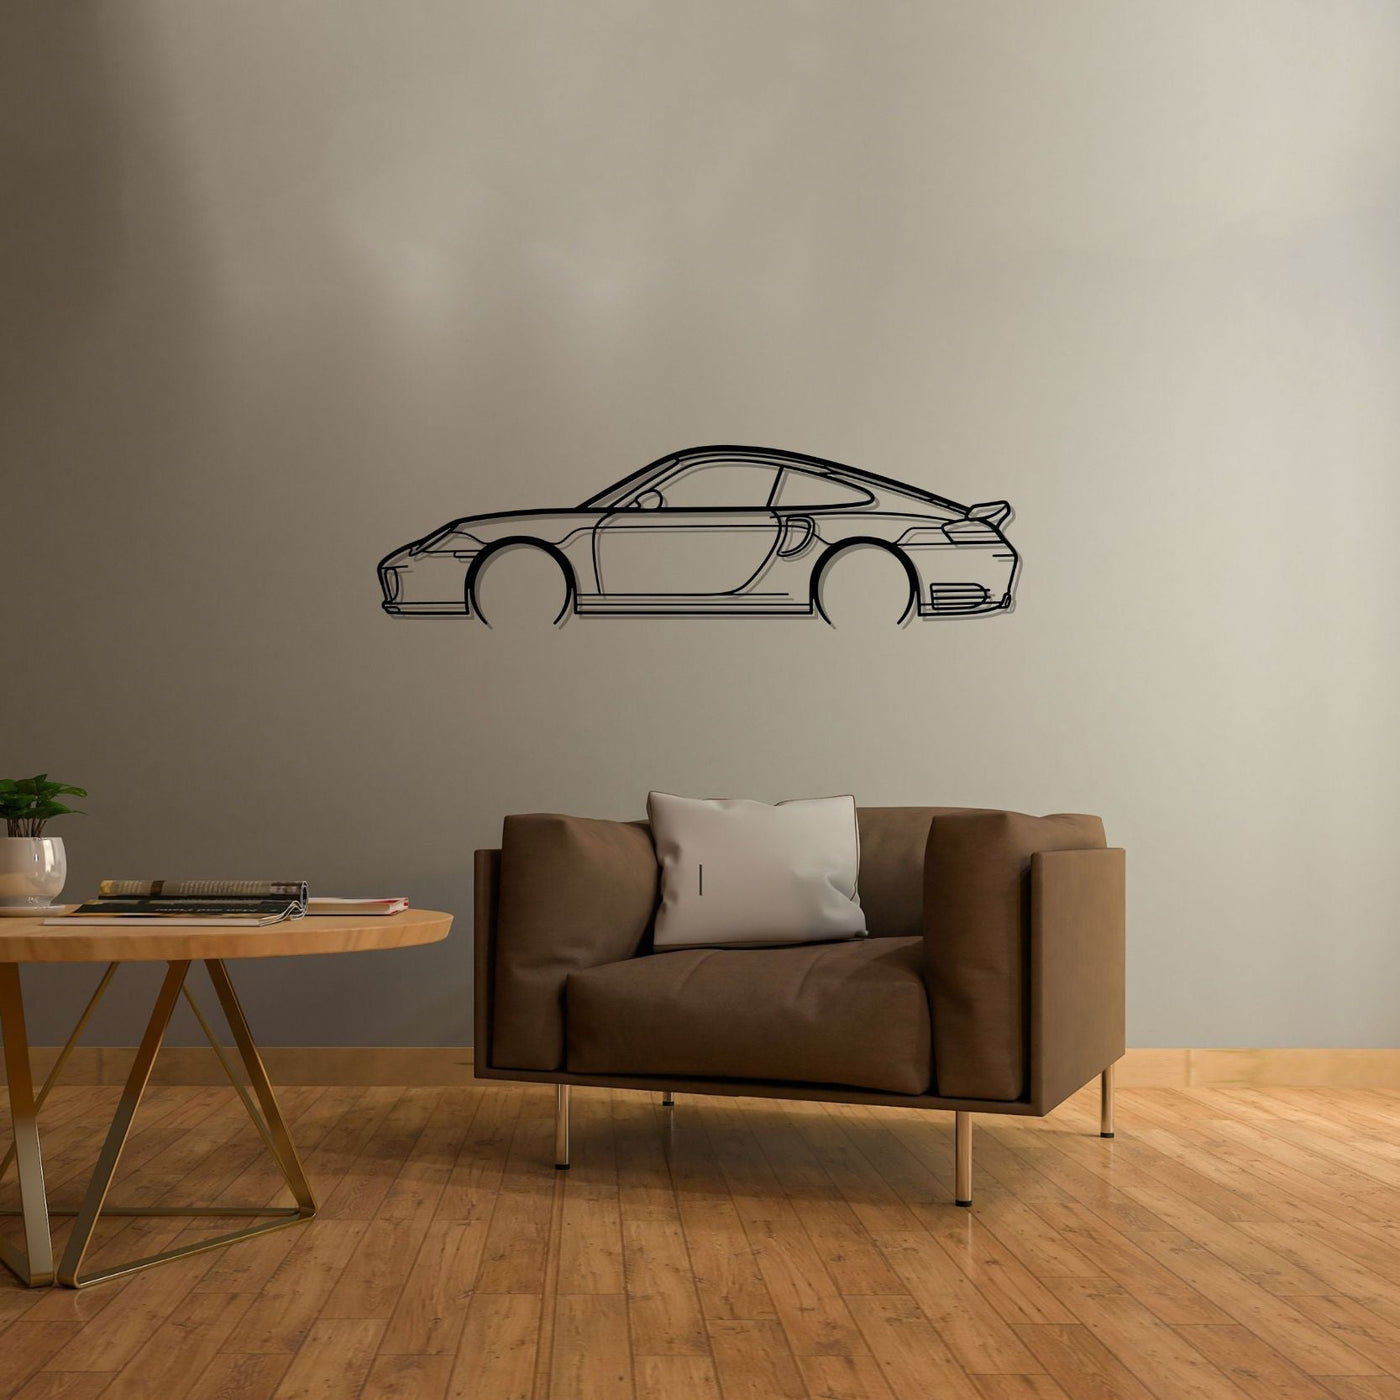 911 Turbo model 996 Detailed Silhouette Metal Wall Art